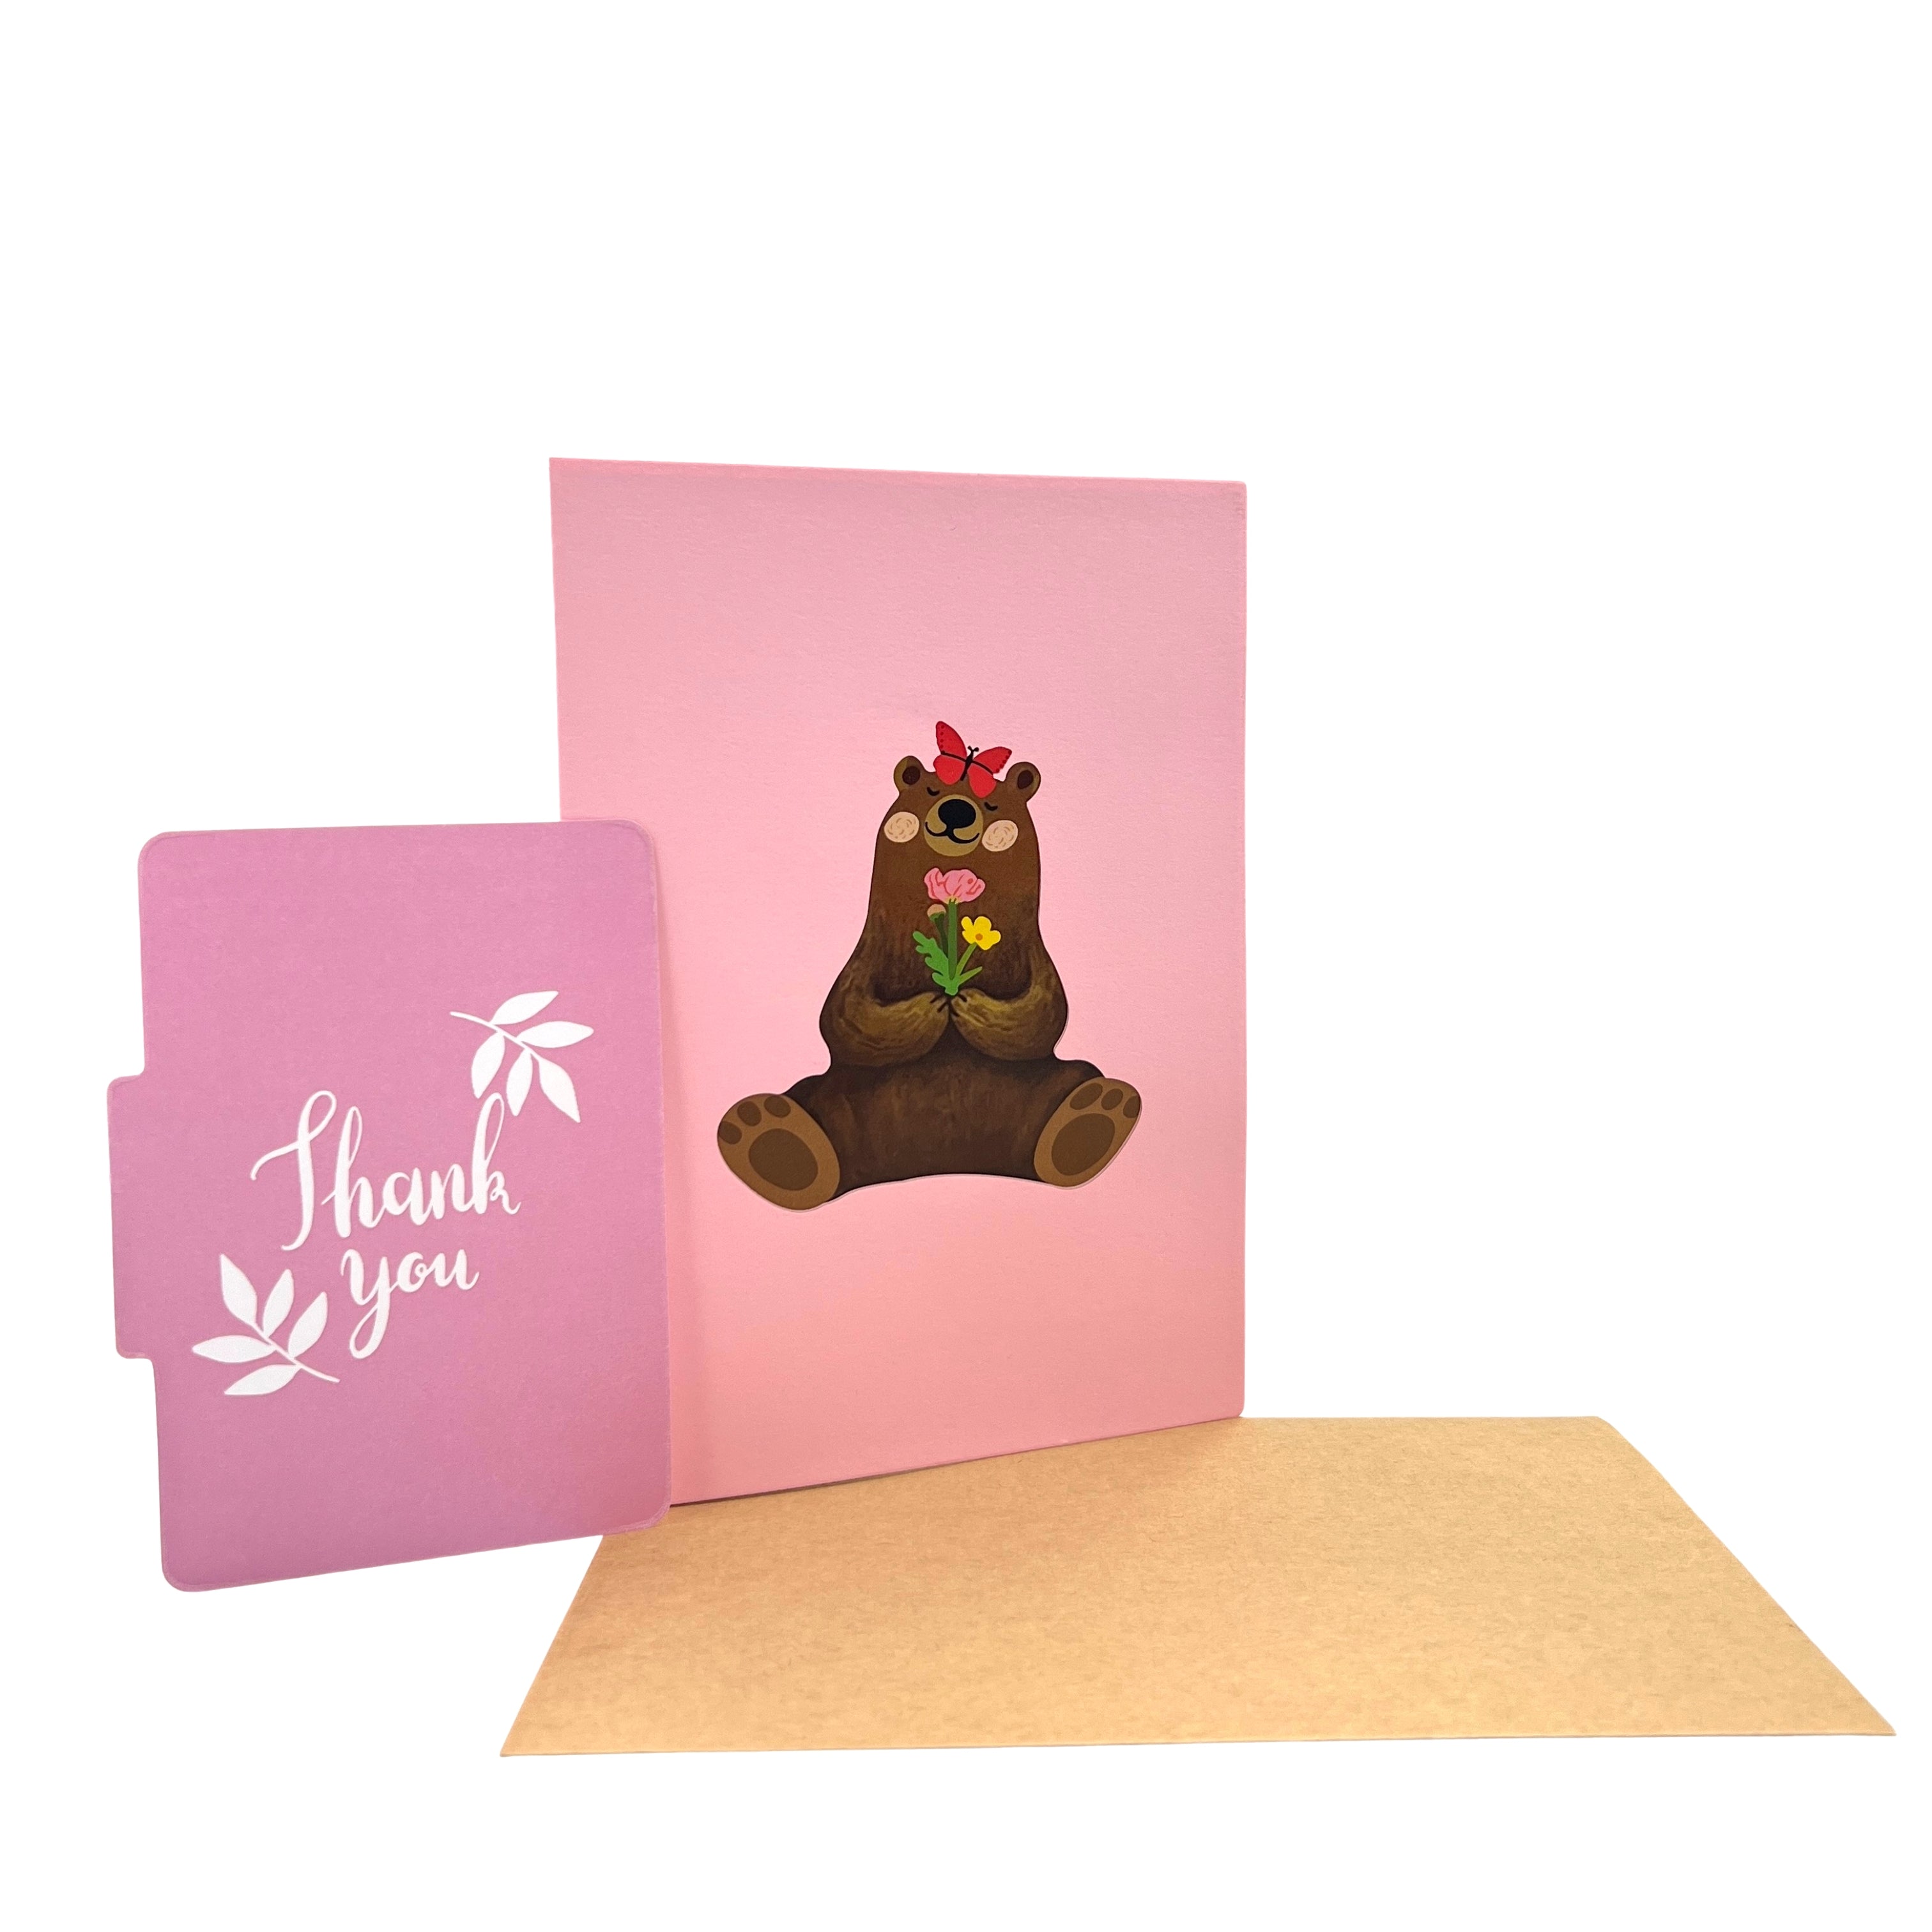 Pop Up Greeting Card Joyful Bear in Flower Gift Wooden Cart Nature Card Cartoon Card Birthday Thank You Gift Teddy Animal Botanic Garden